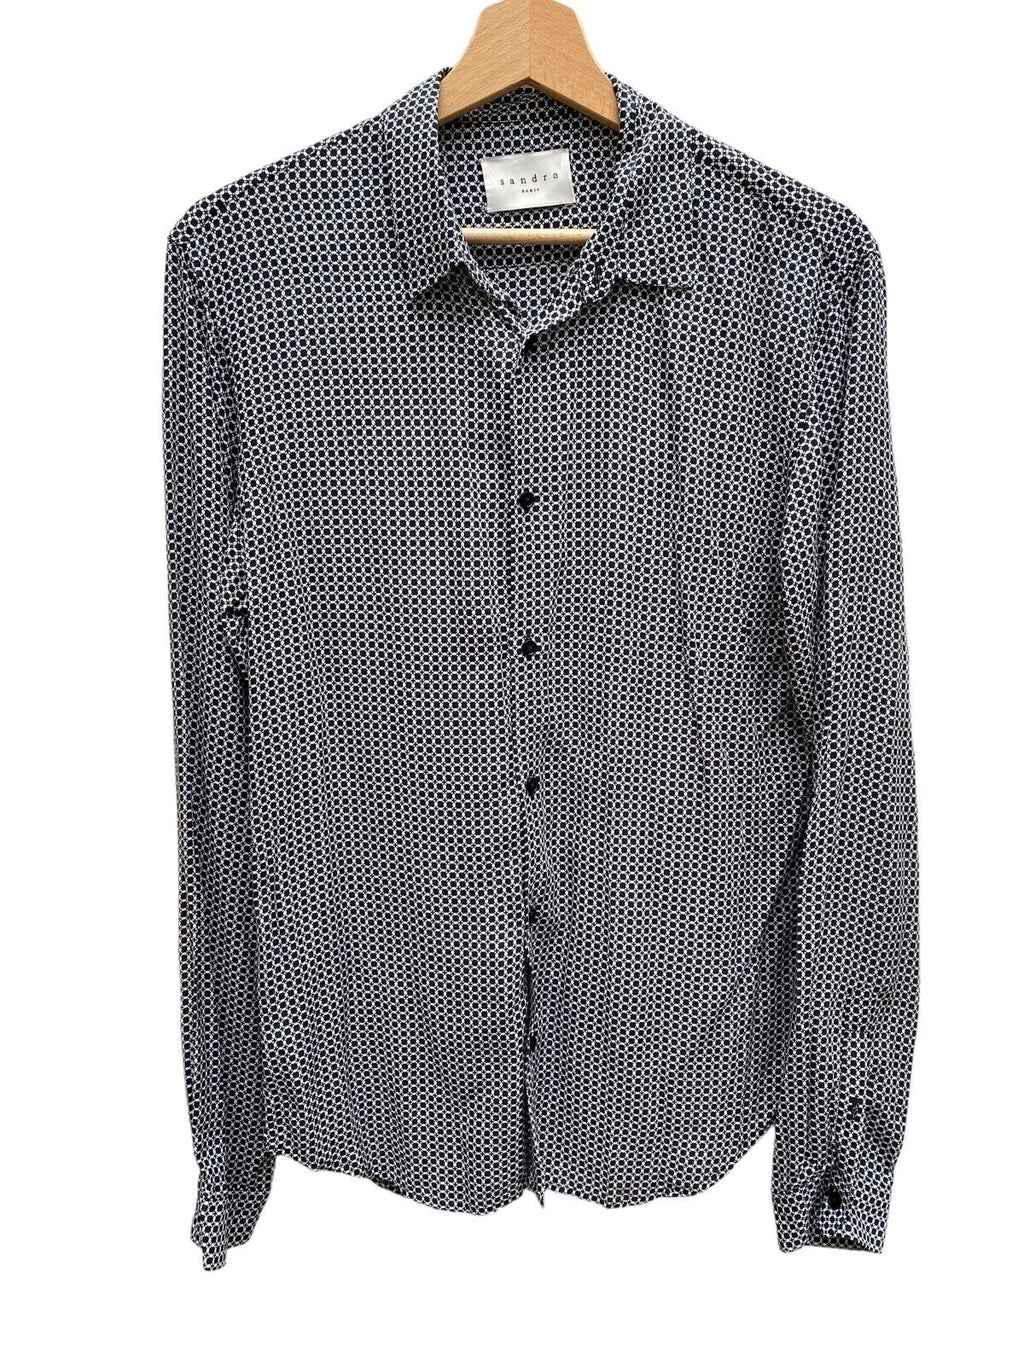 Sandro Paris Silk Like Shirt Size M (fits S) Same shirt worn by Harry styles